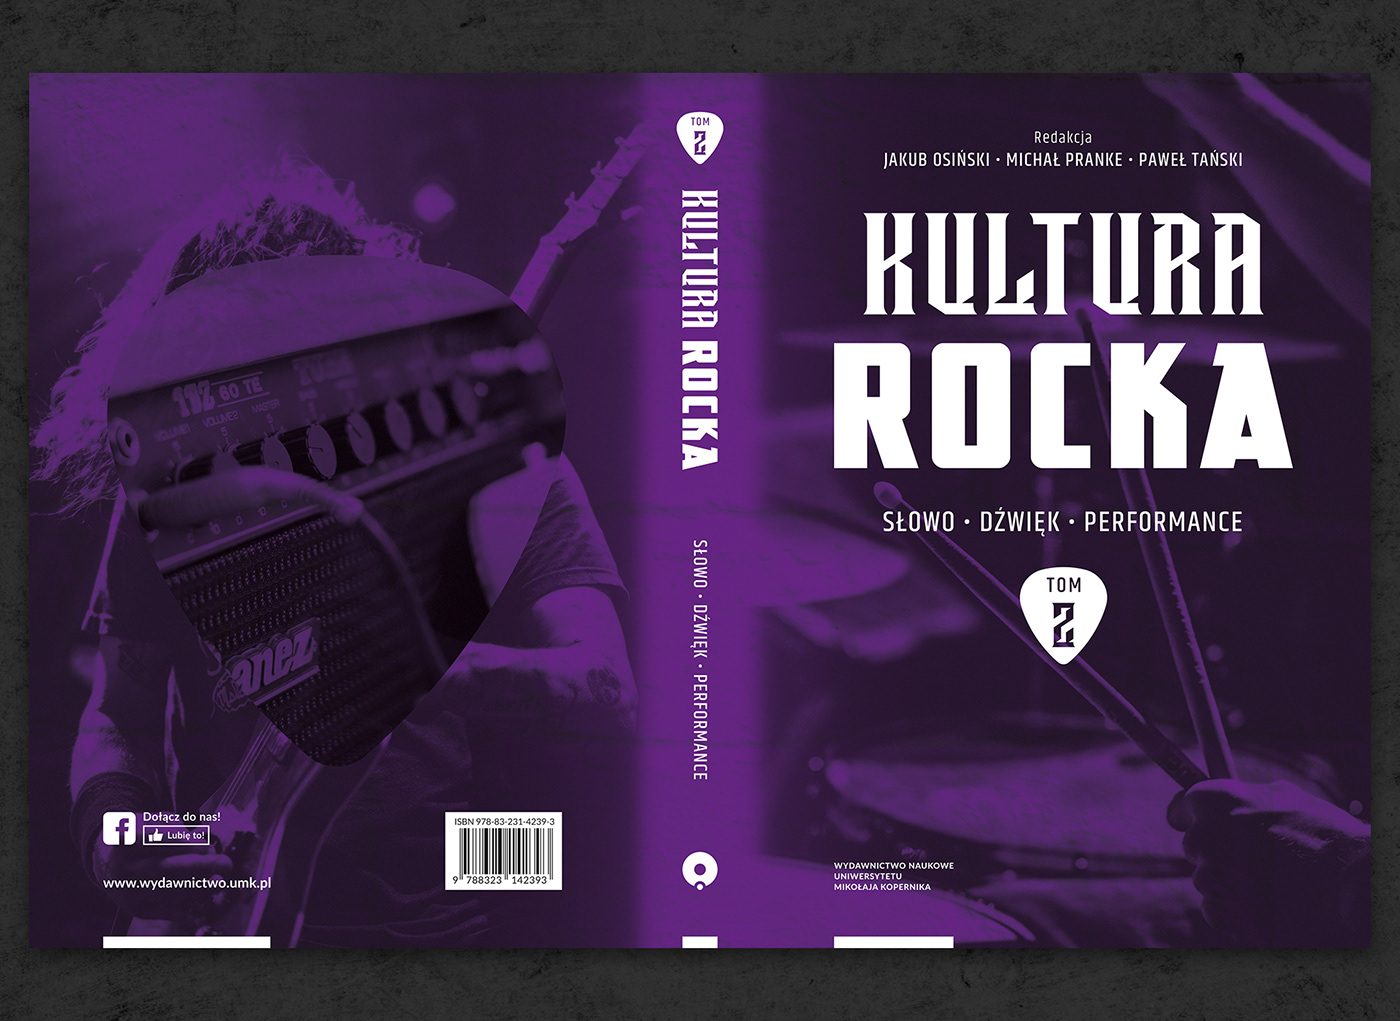 book cover culture książka music okładka okładka książki publishing series rock series